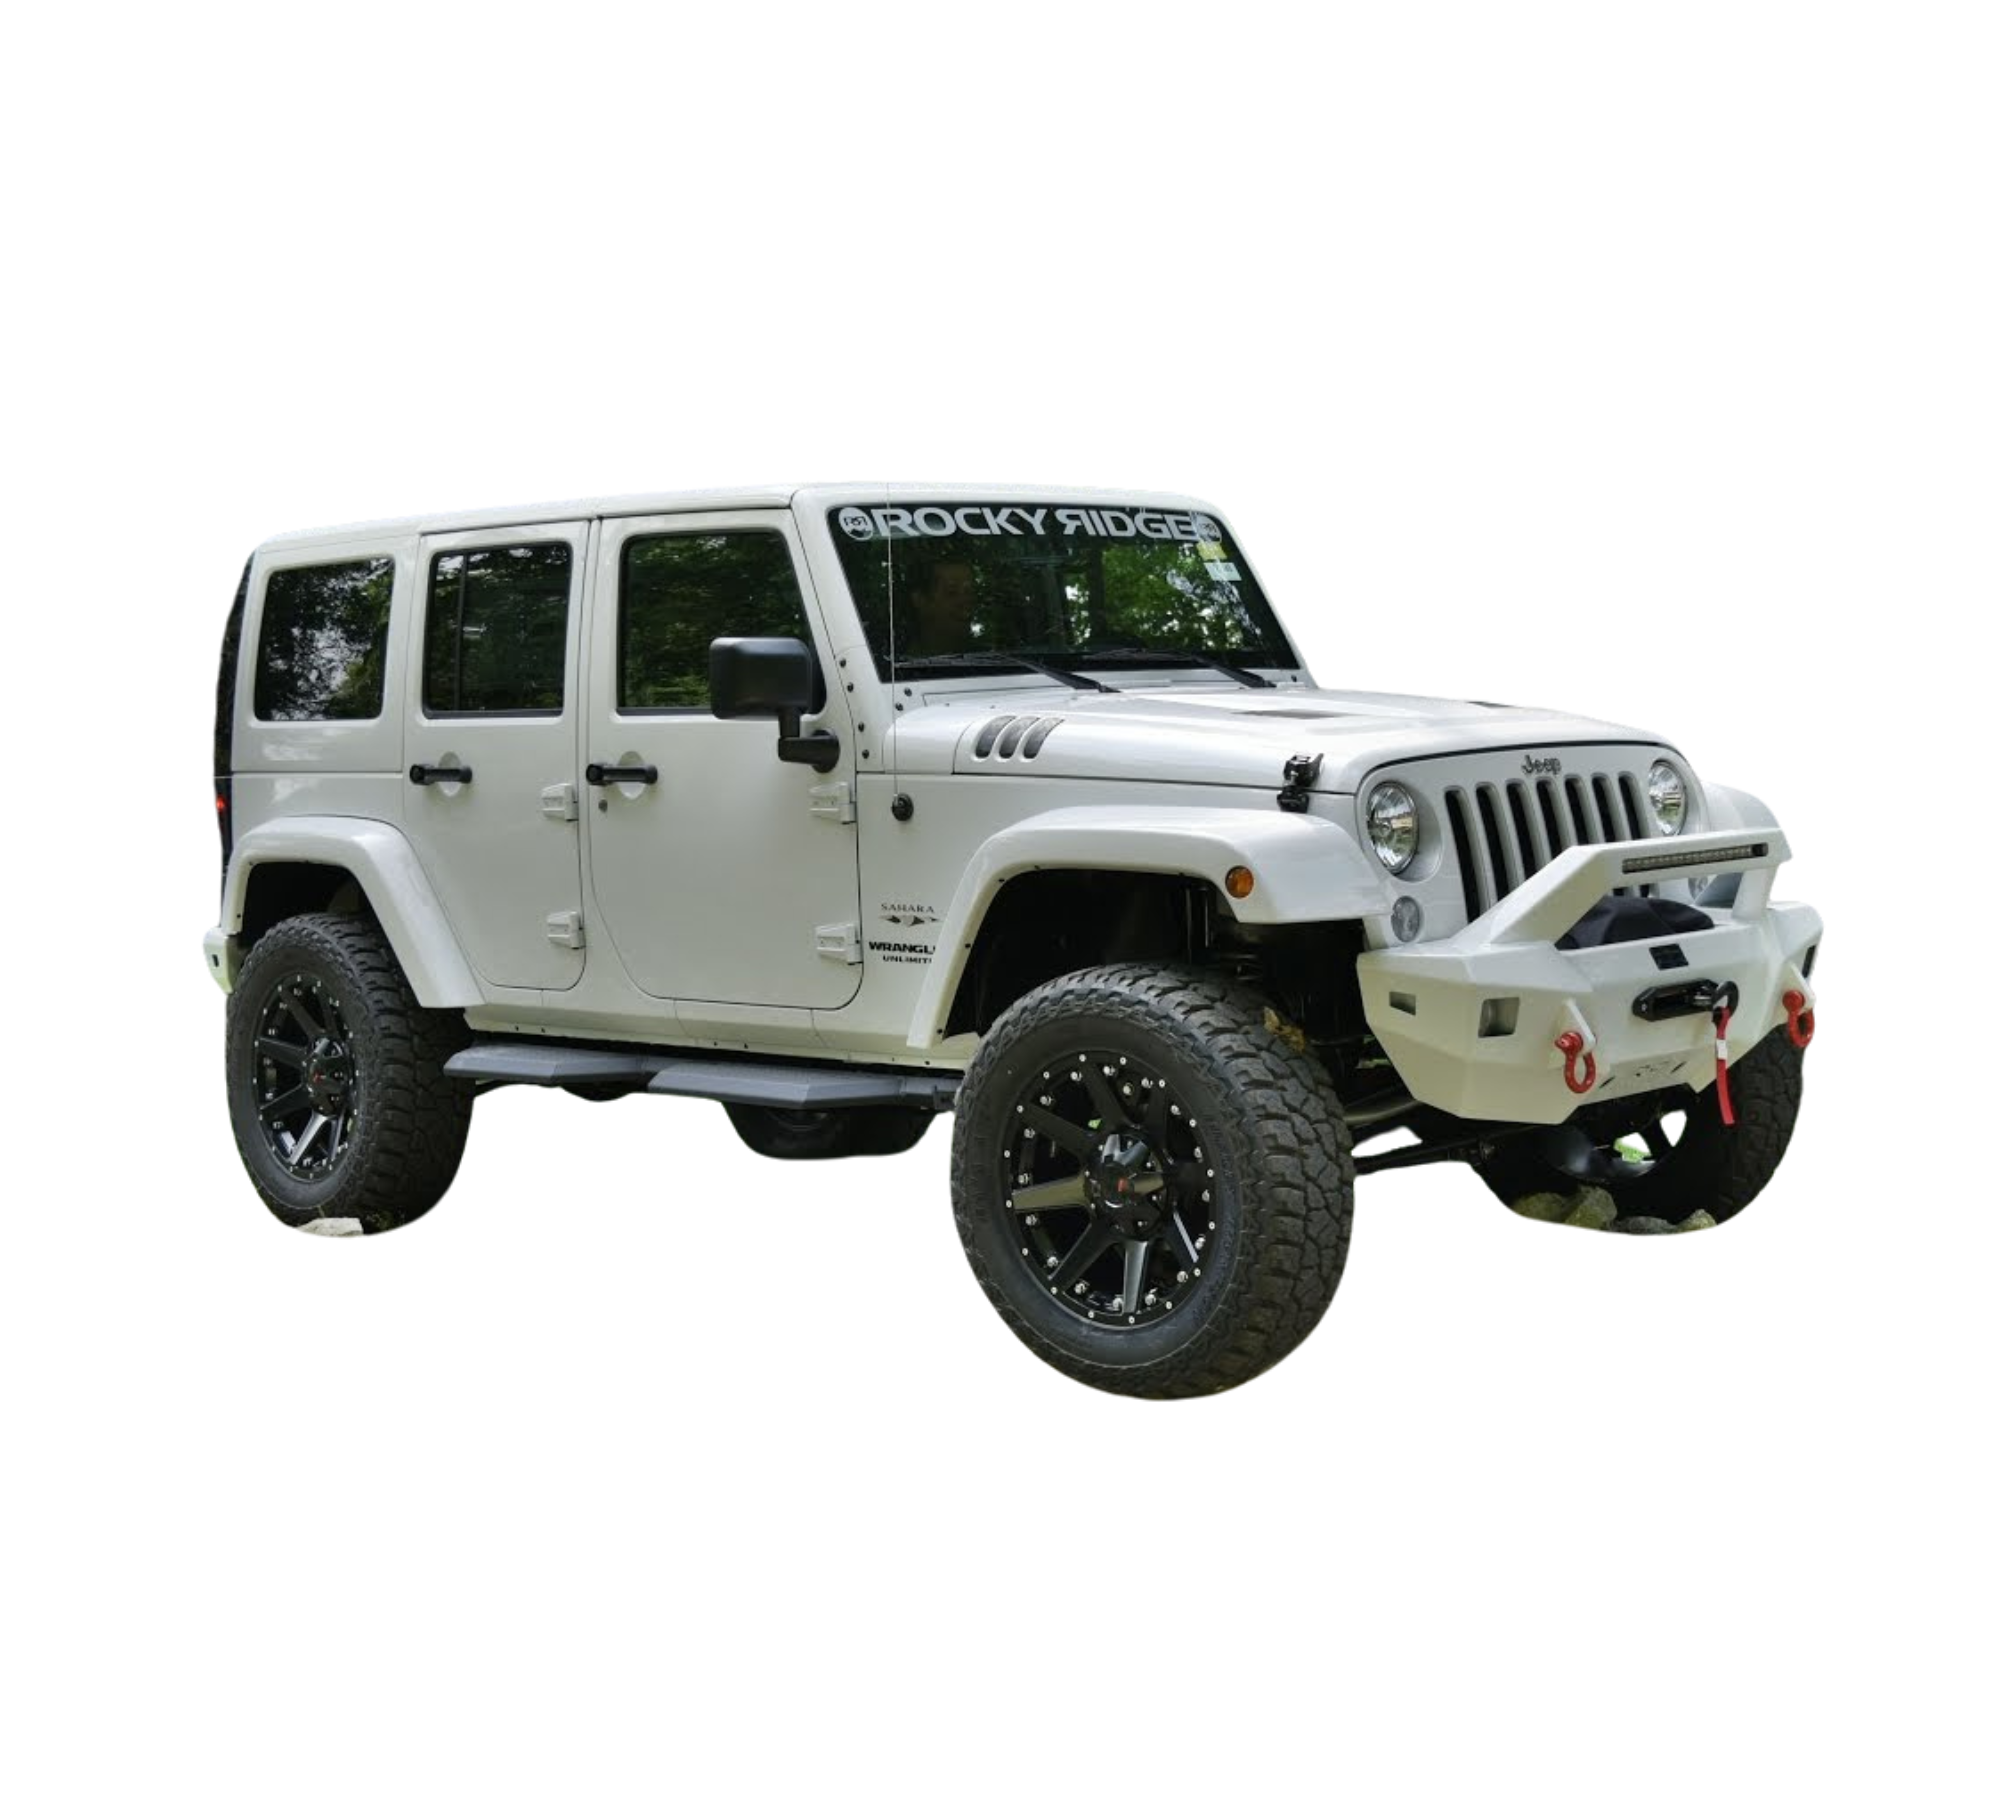 rocky-ridge-lifted-jeep-adrenaline